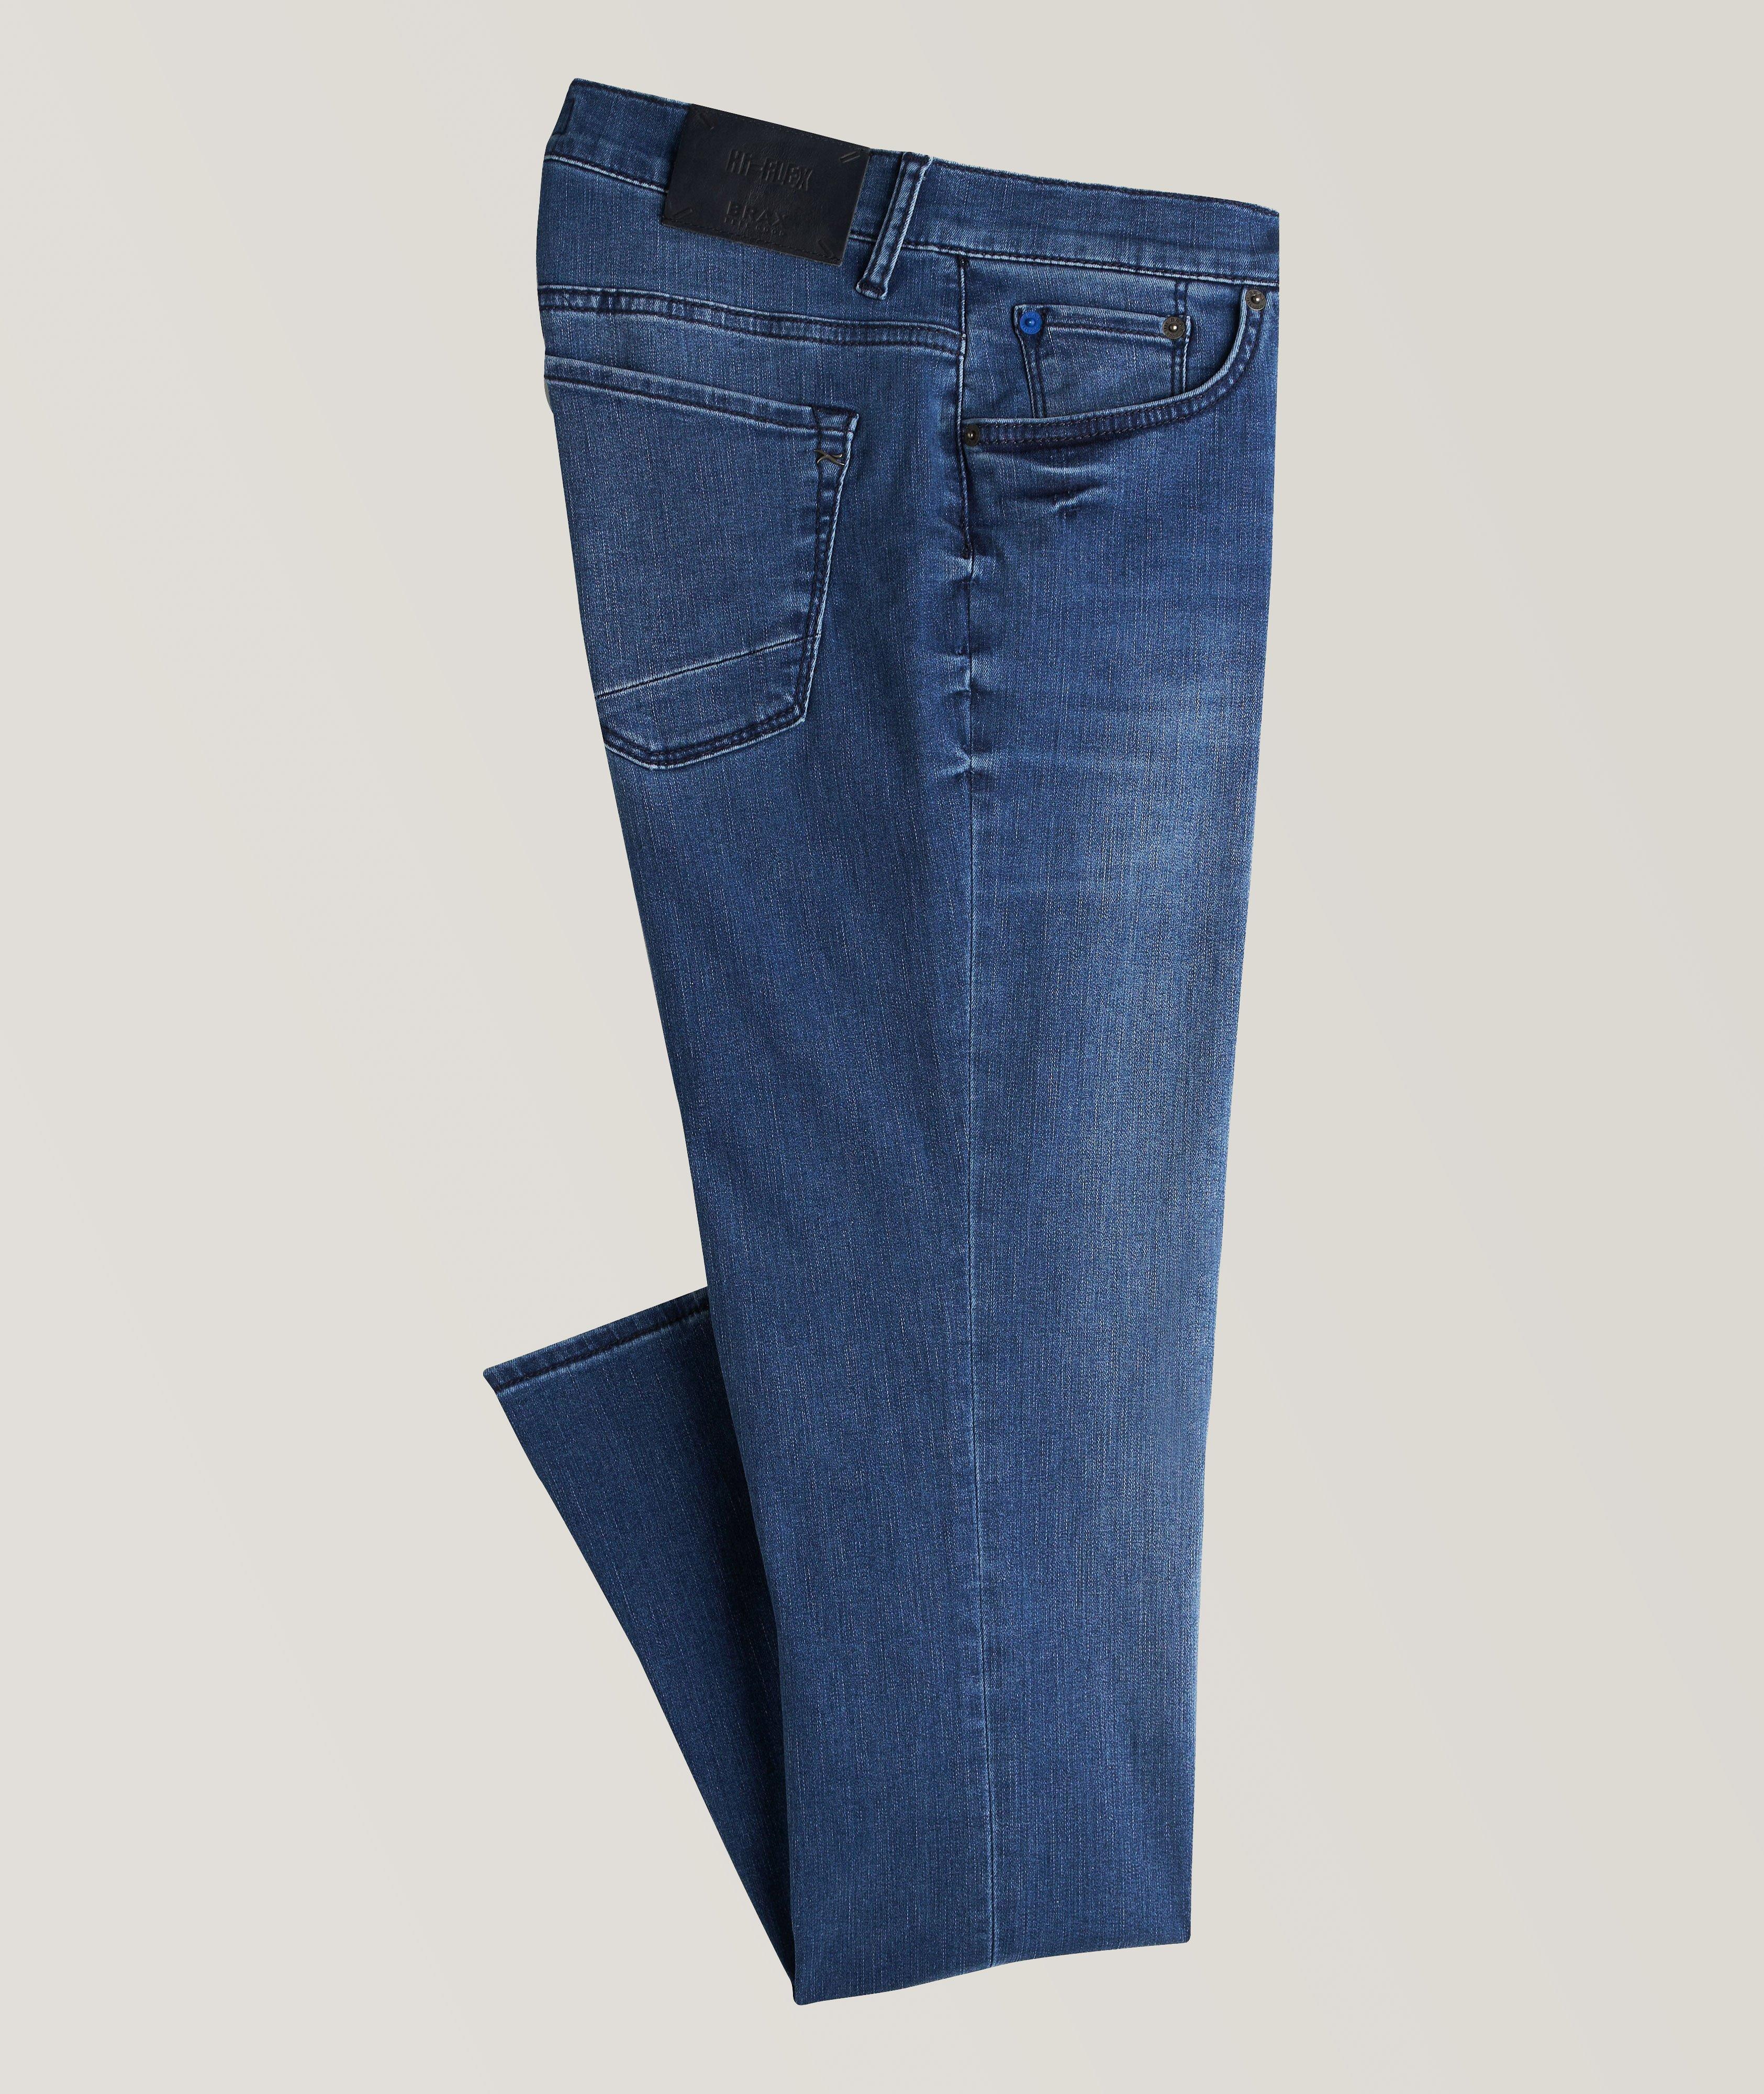 Chuck Hi-Flex Modern Fit Jeans image 0